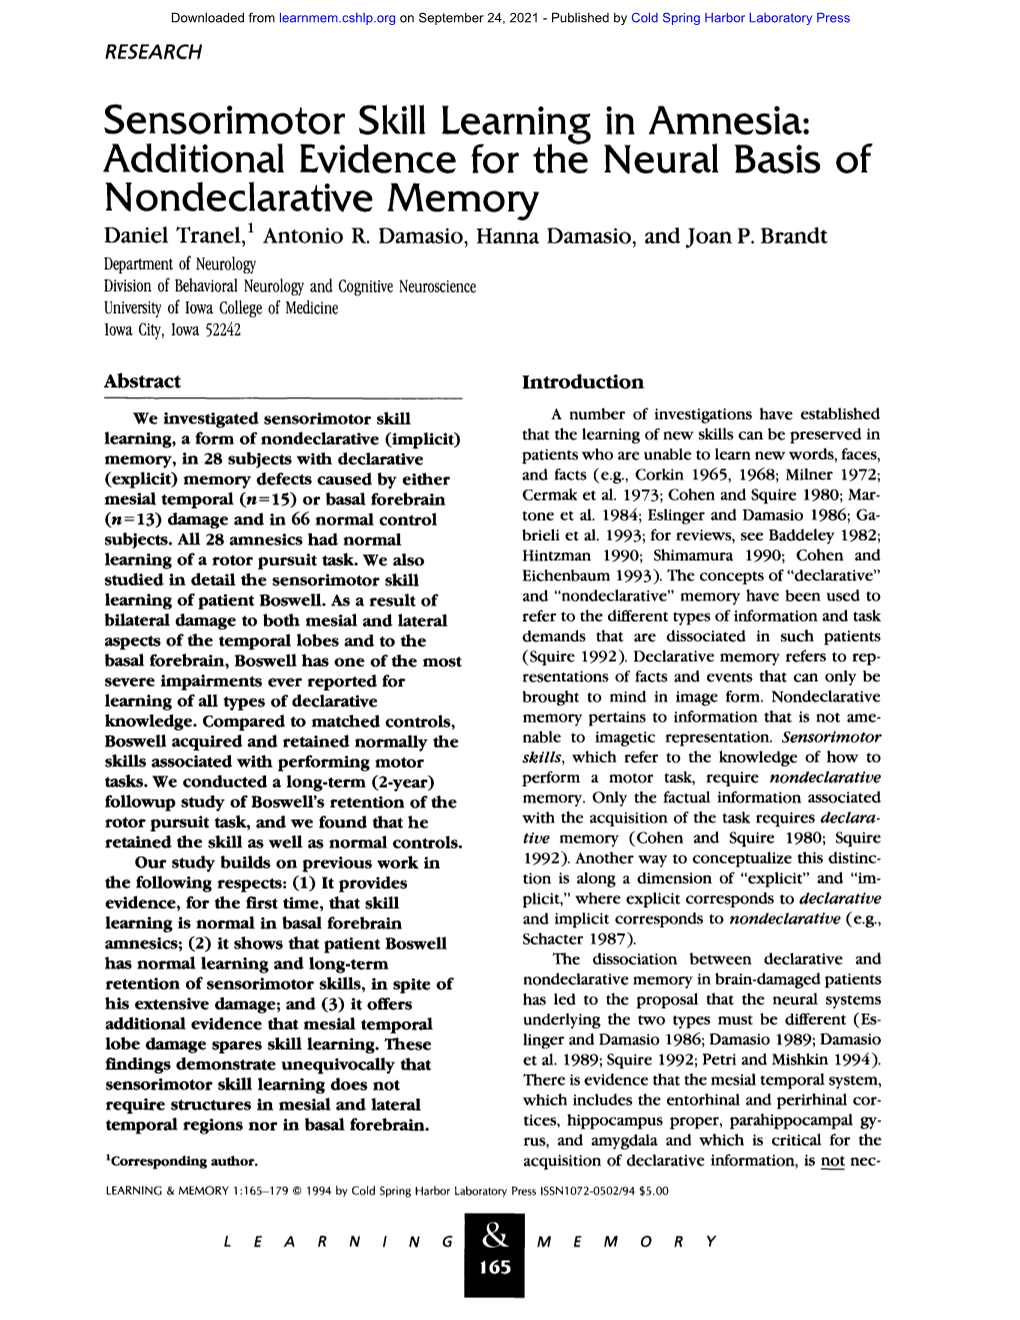 Sensorimotor Skill Learning in Amnesia: Additional Evidence for the Neural Basis of Nondeclarative Memory Daniel Tranel, 1 Antonio R